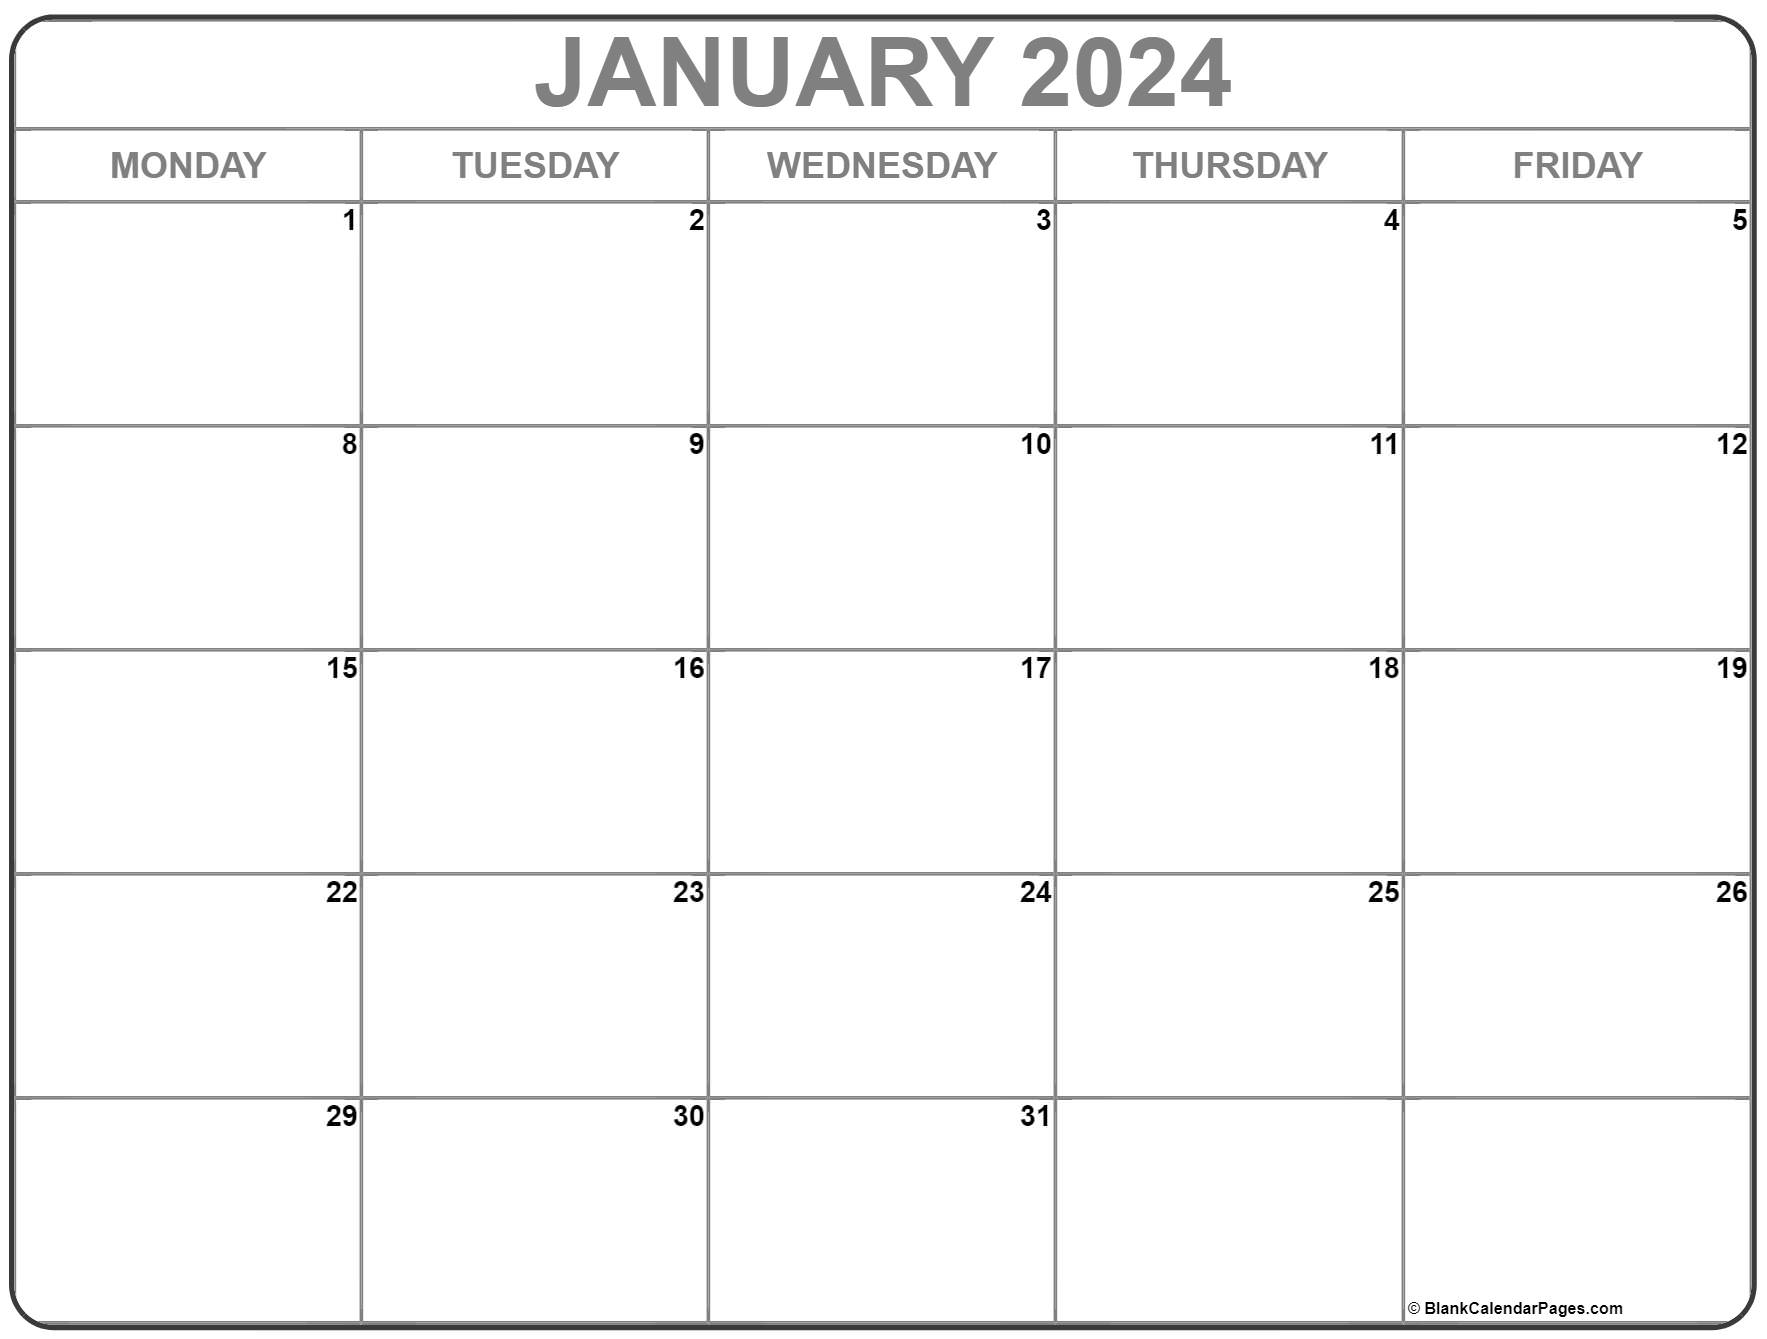 january-2024-empty-calendar-new-awasome-incredible-january-2024-calendar-blank